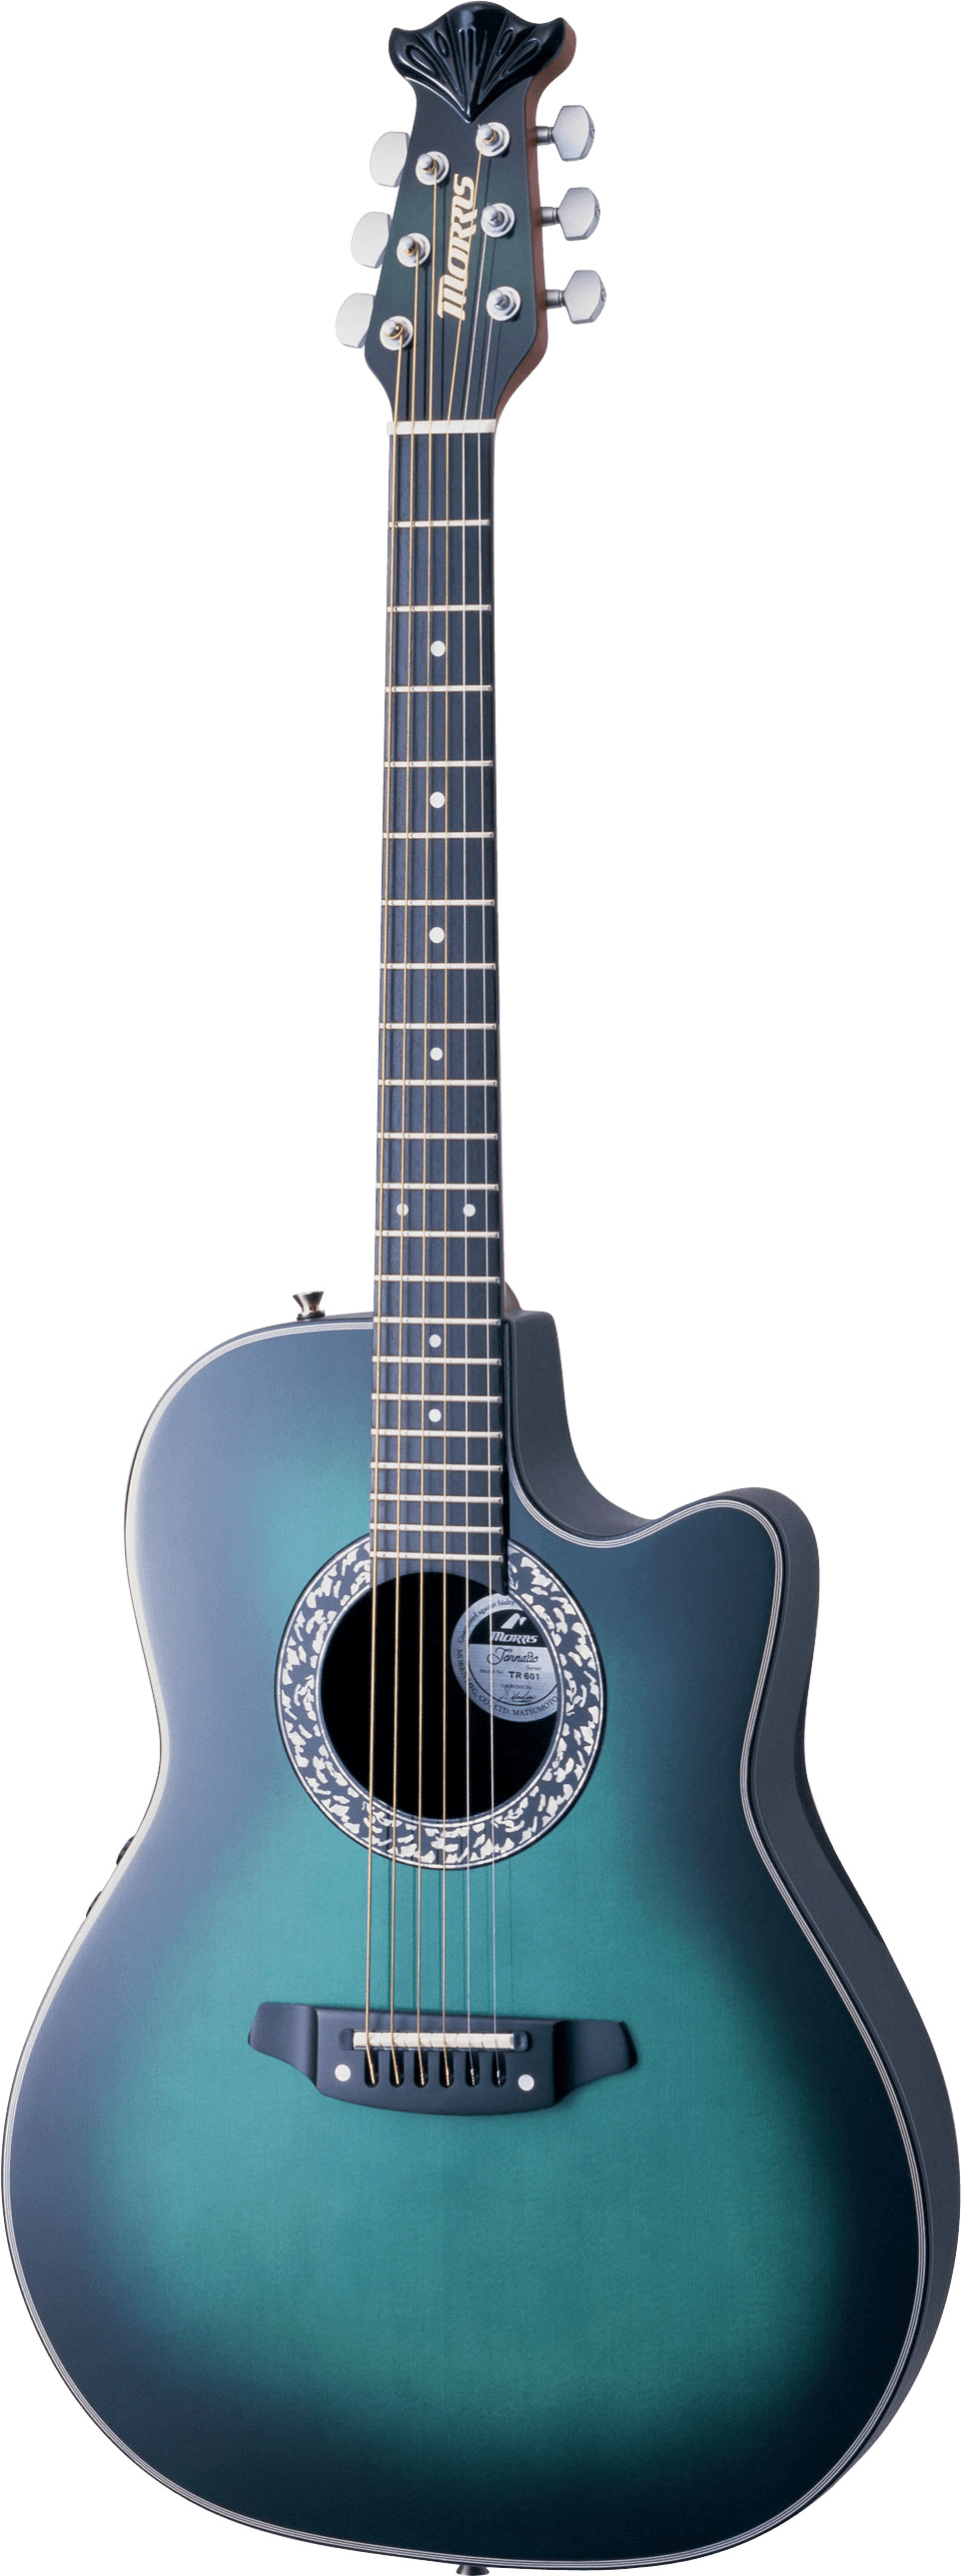 Acoustic Blue Guitar icons